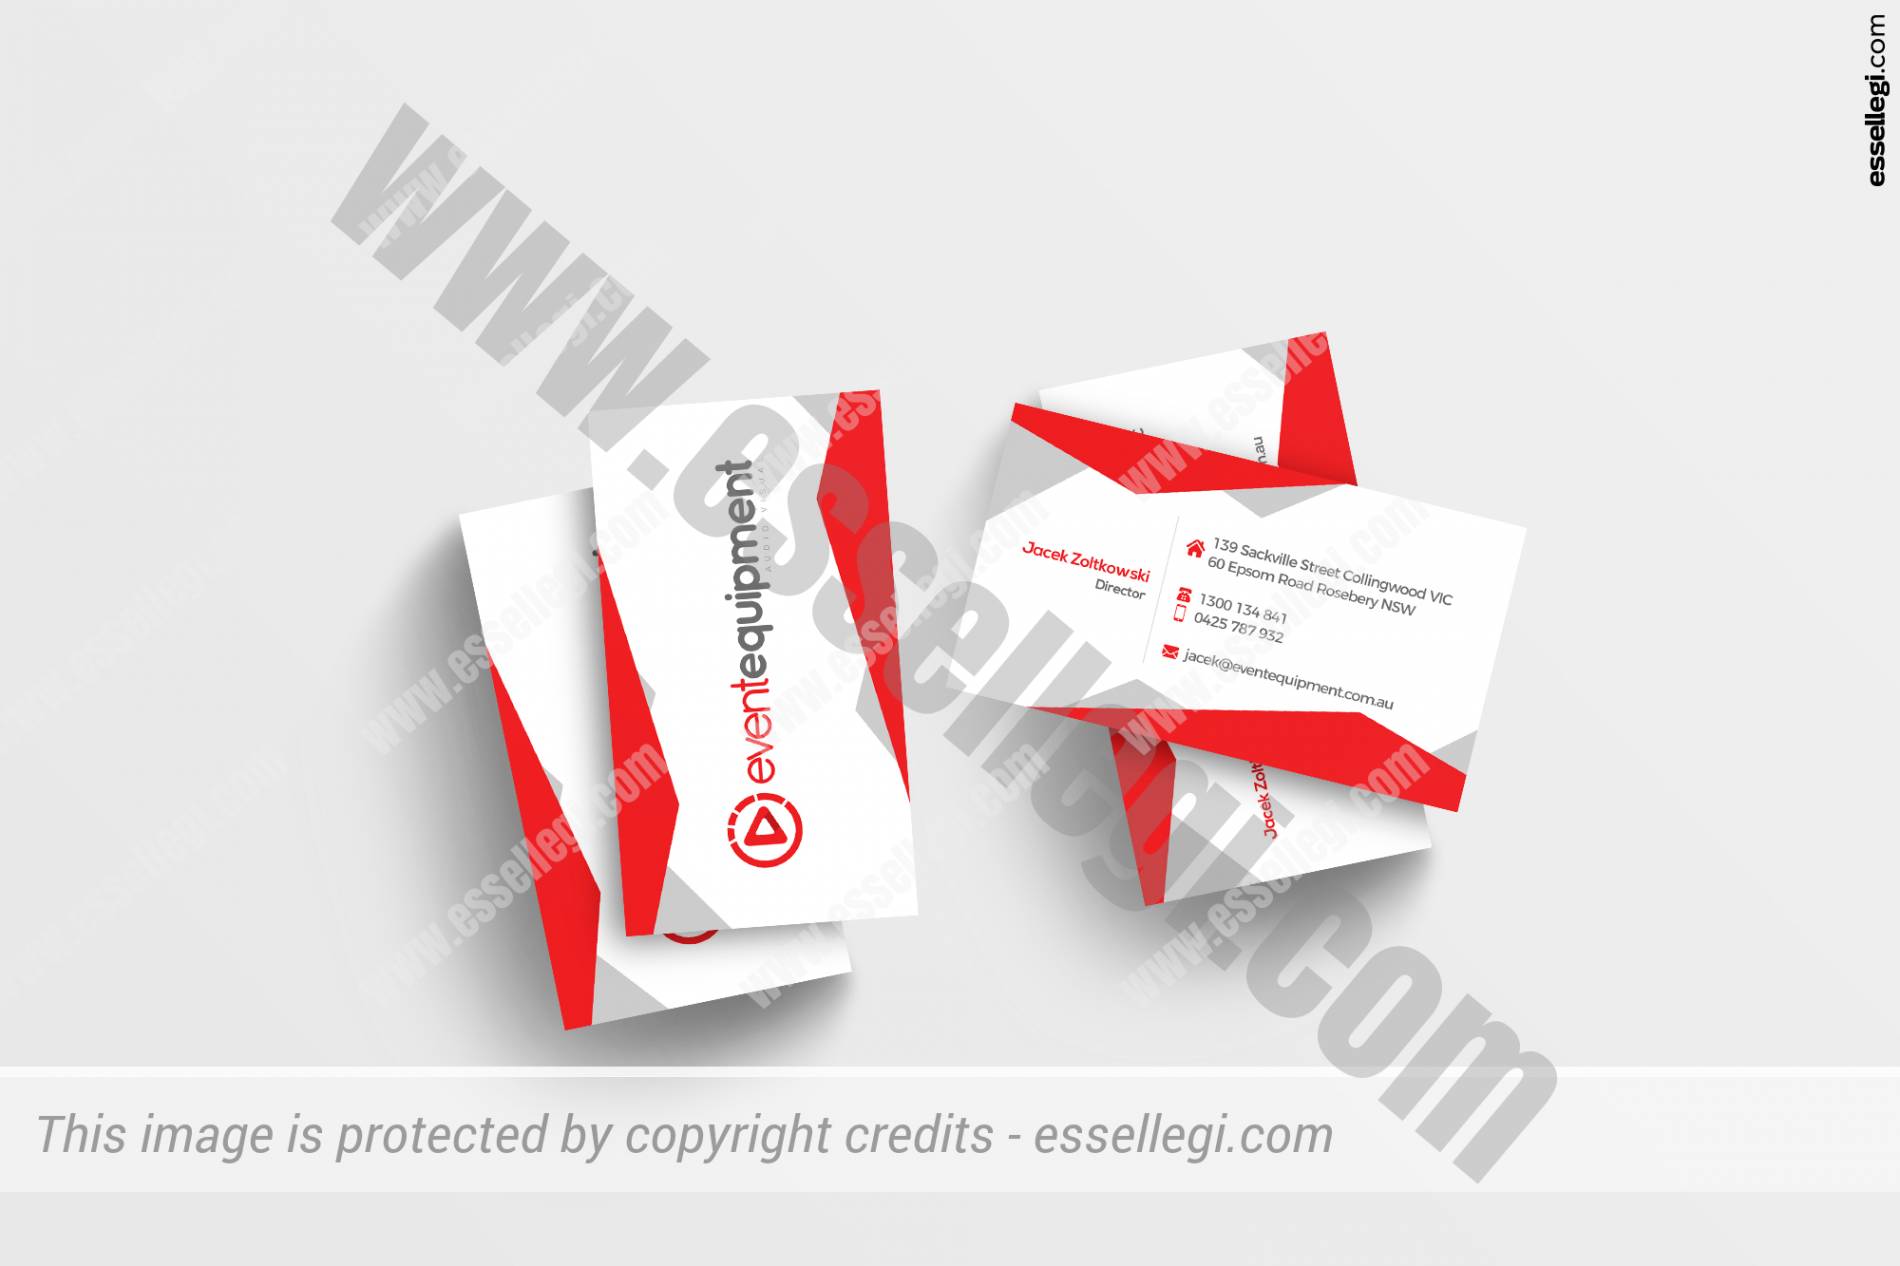 Business Card Design. Event Equipment Audio Visual Events Brand Identity Design by Essellegi Design